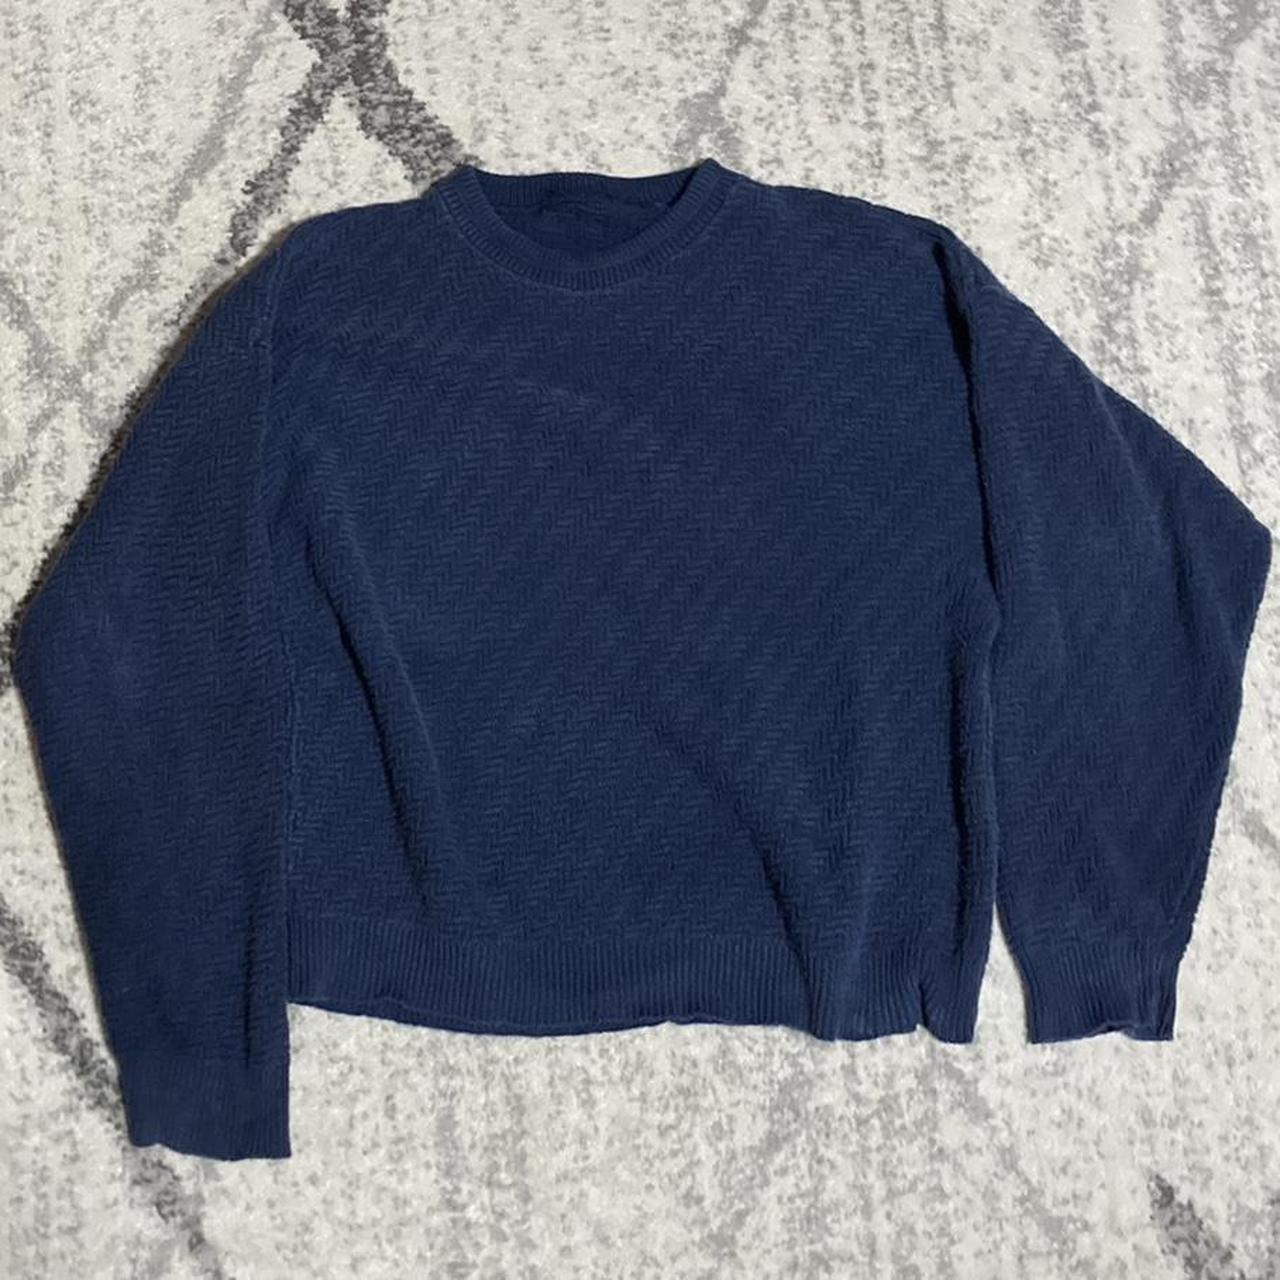 blue grandpa knit sweater men’s large/xl 9/10 condition - Depop